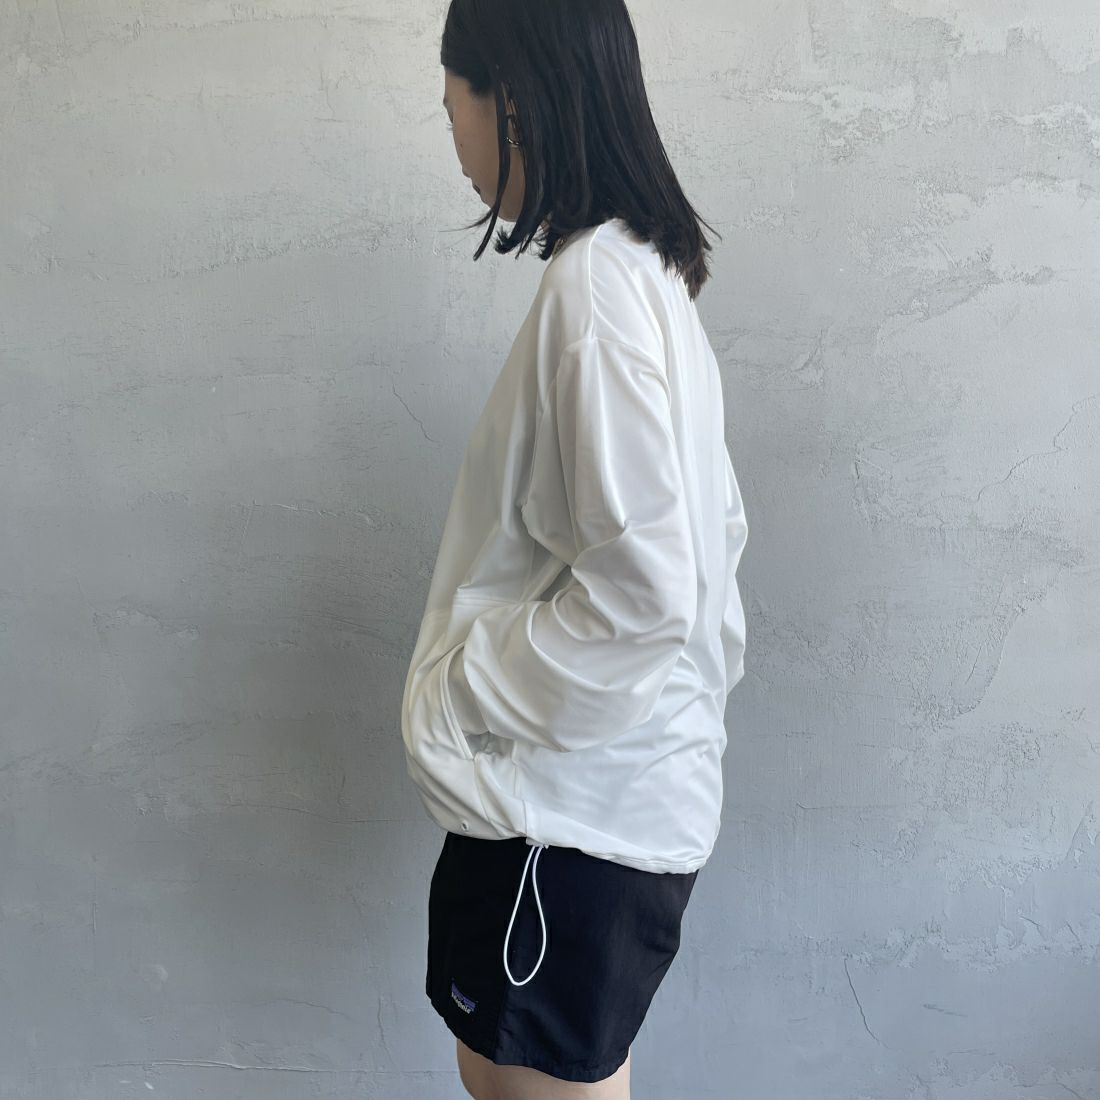 Jeans Factory Clothes [ジーンズファクトリークローズ] 裾ドローコードラッシュガードTシャツ [IN2-CST-4] WHITE